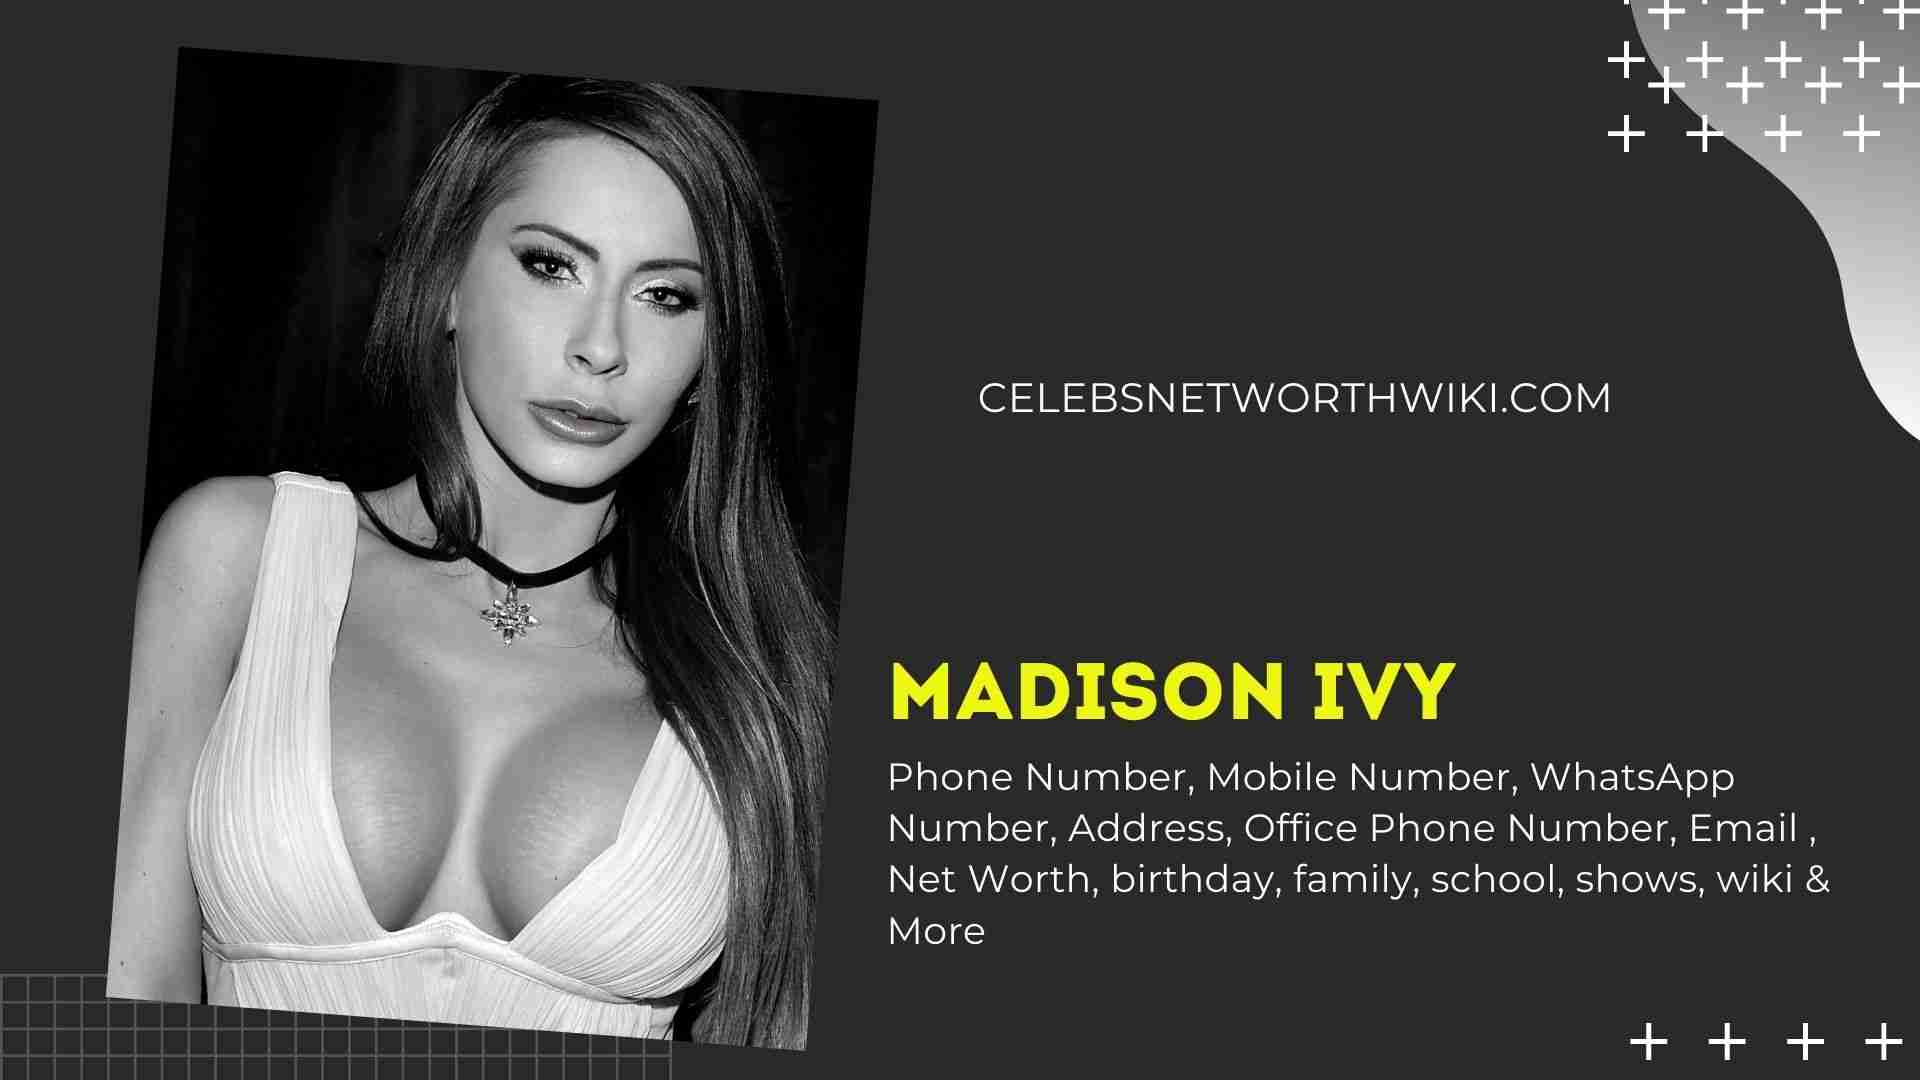 Madison ivy phone number